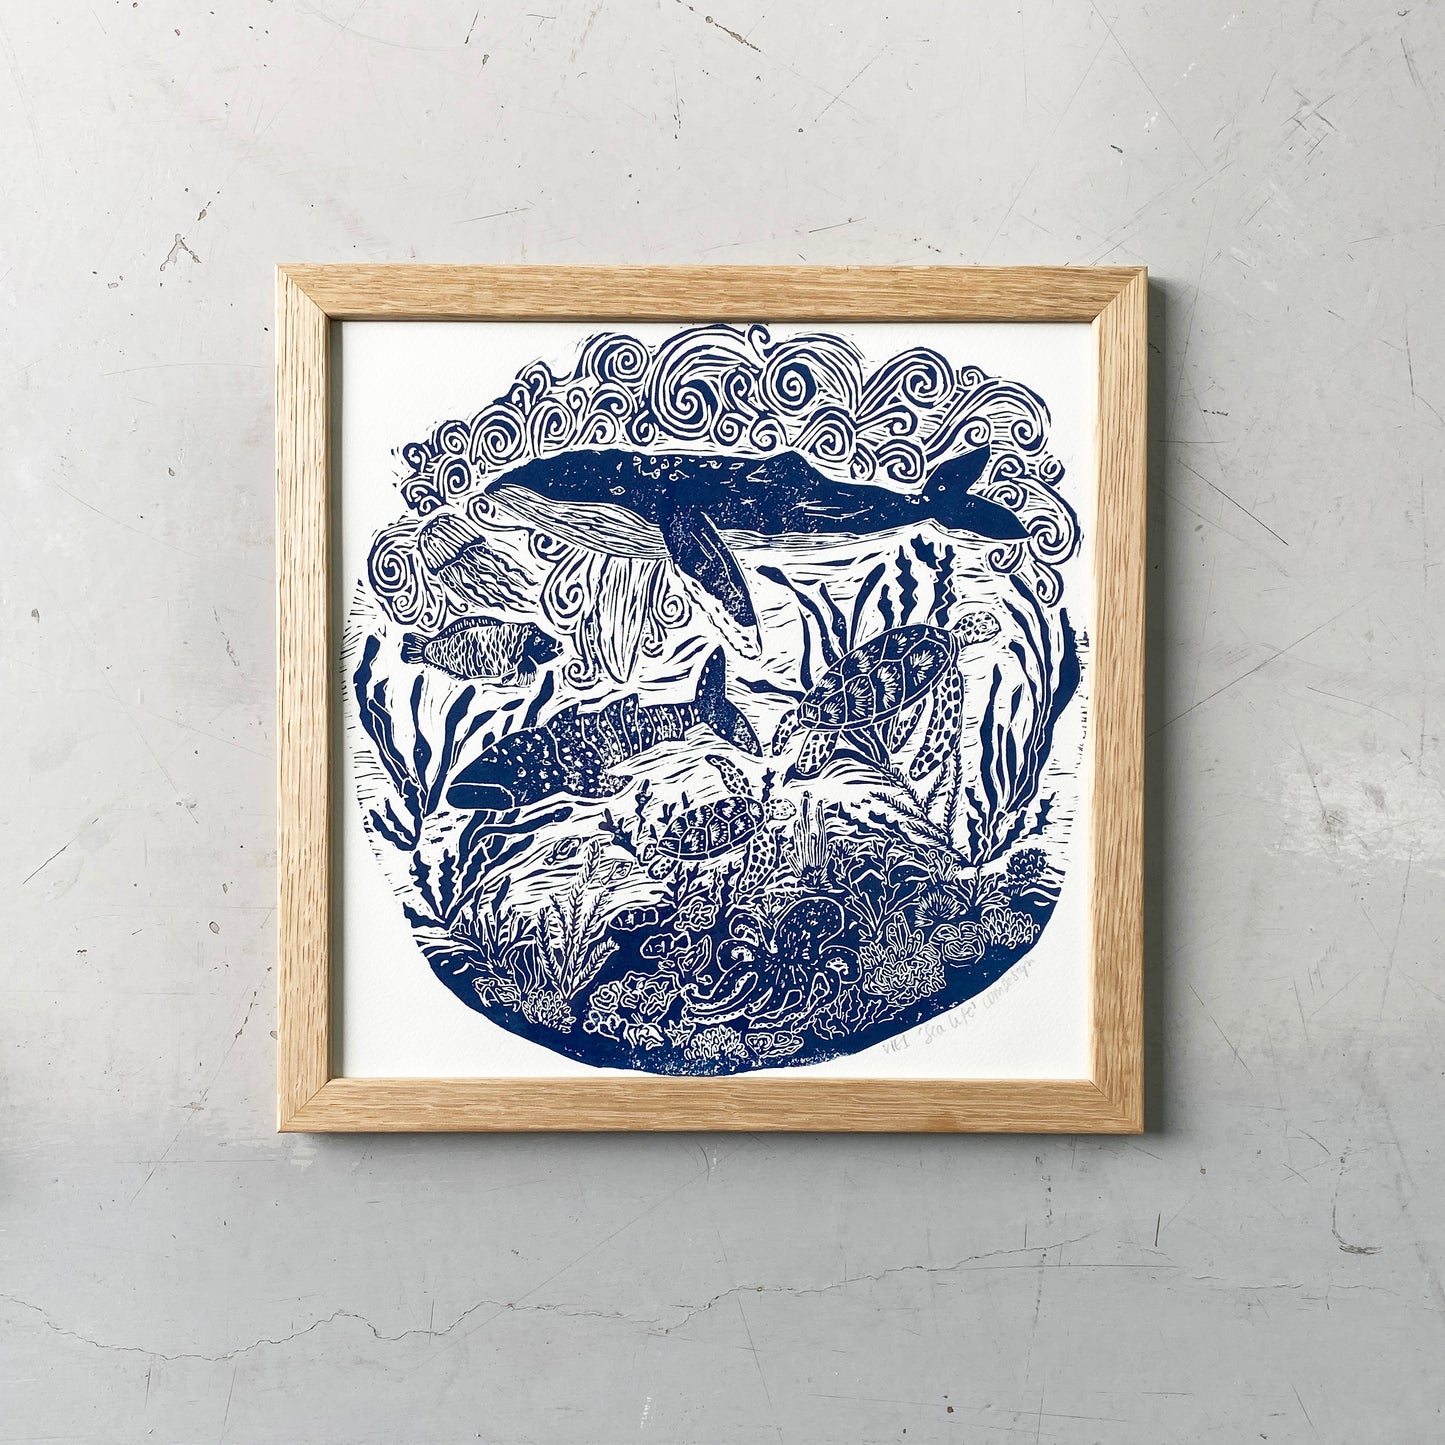 Sea Life Framed Lino cut print by LDMDesign